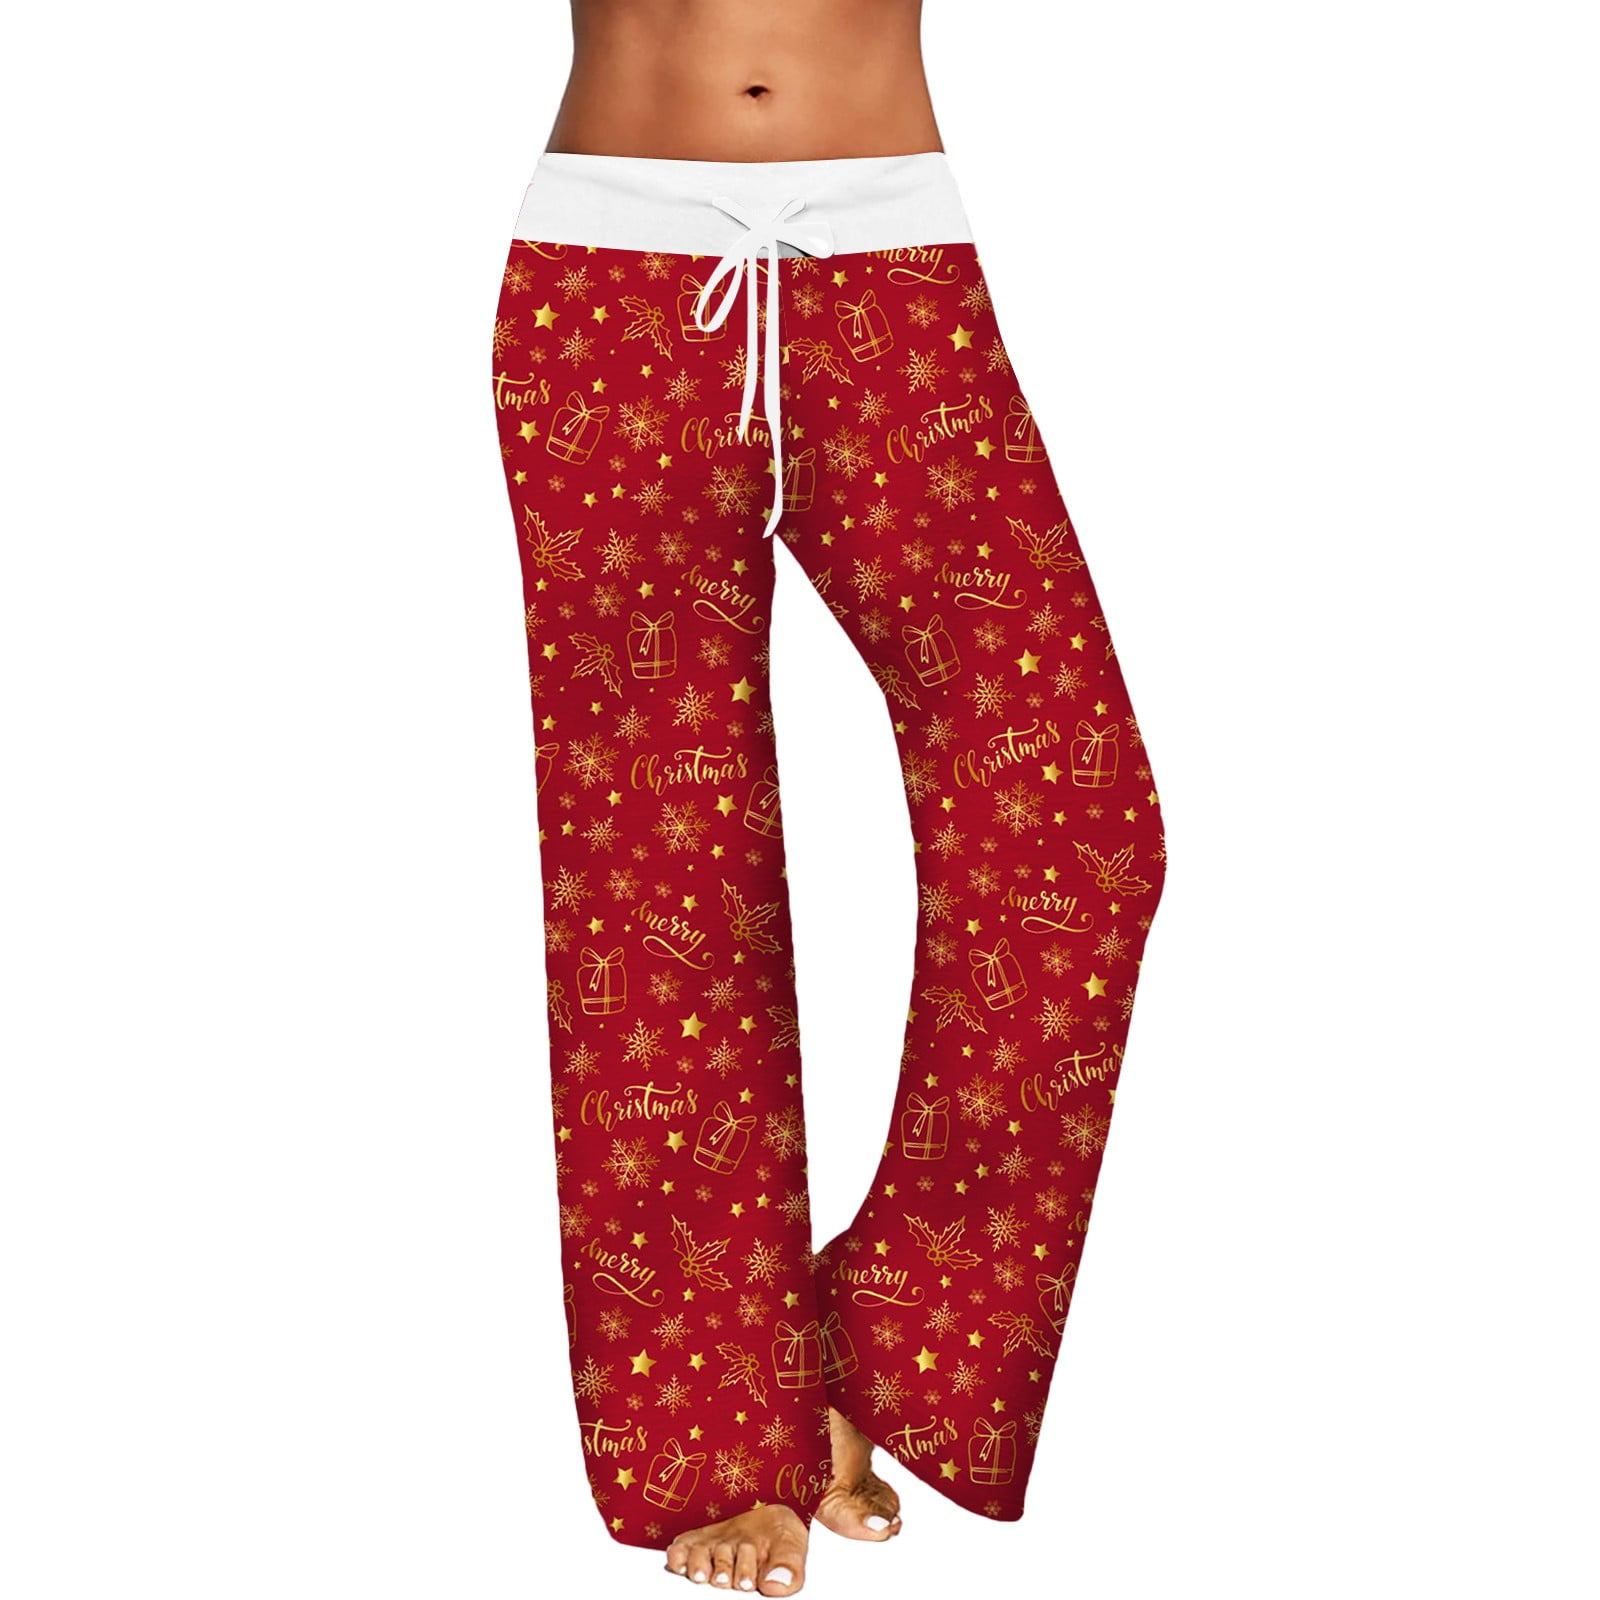 Lisingtool Pajamas for Women Womens Leisure Pants Christmas